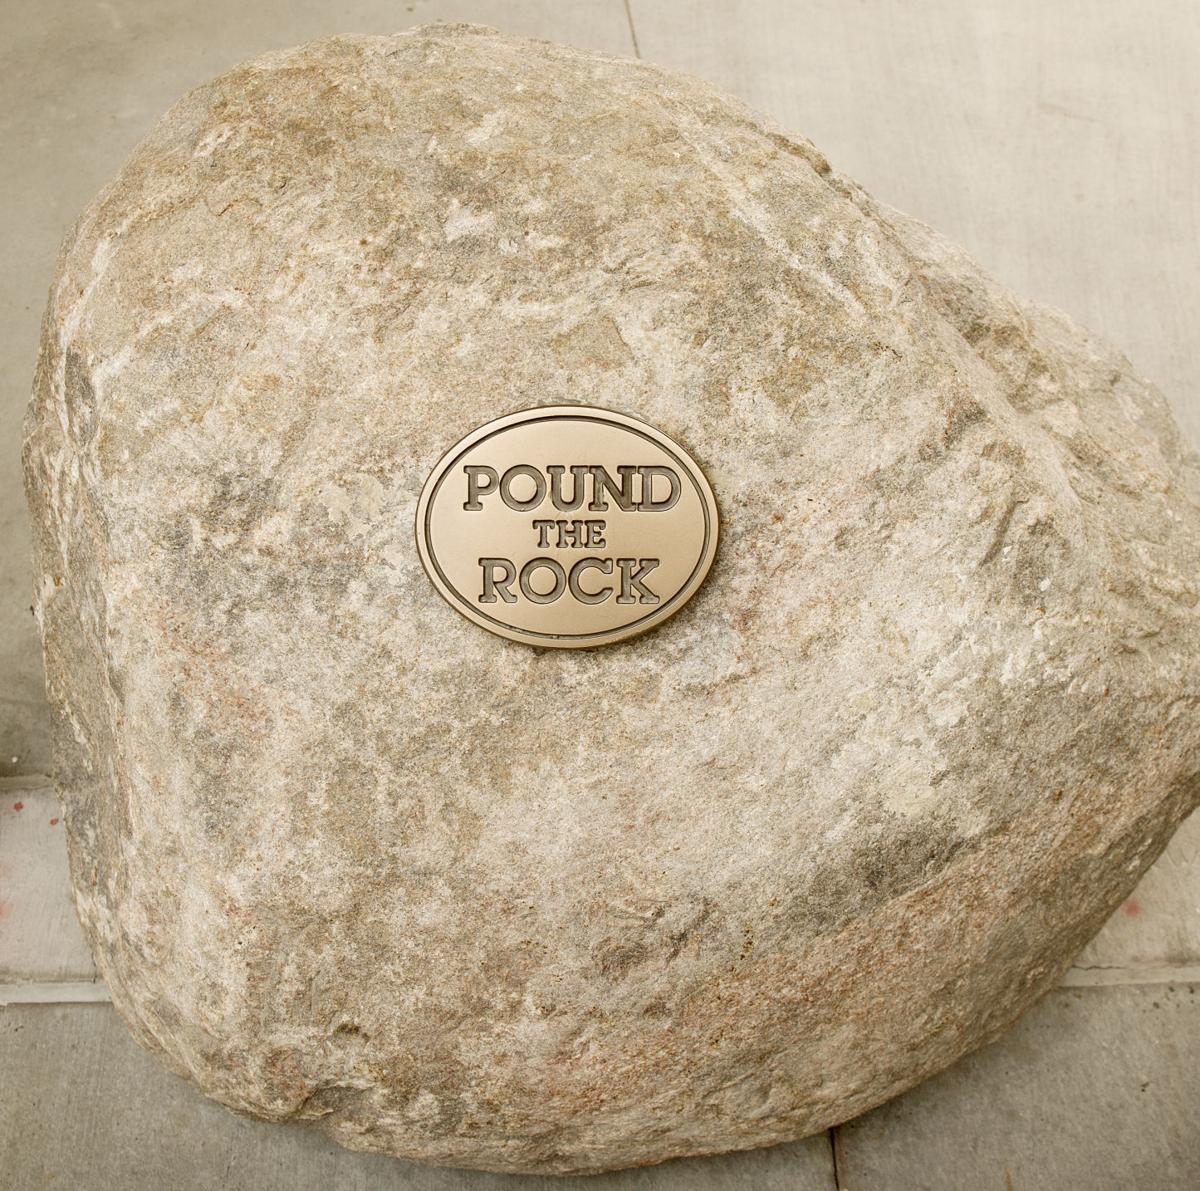 Image result for nebraska pound the rock